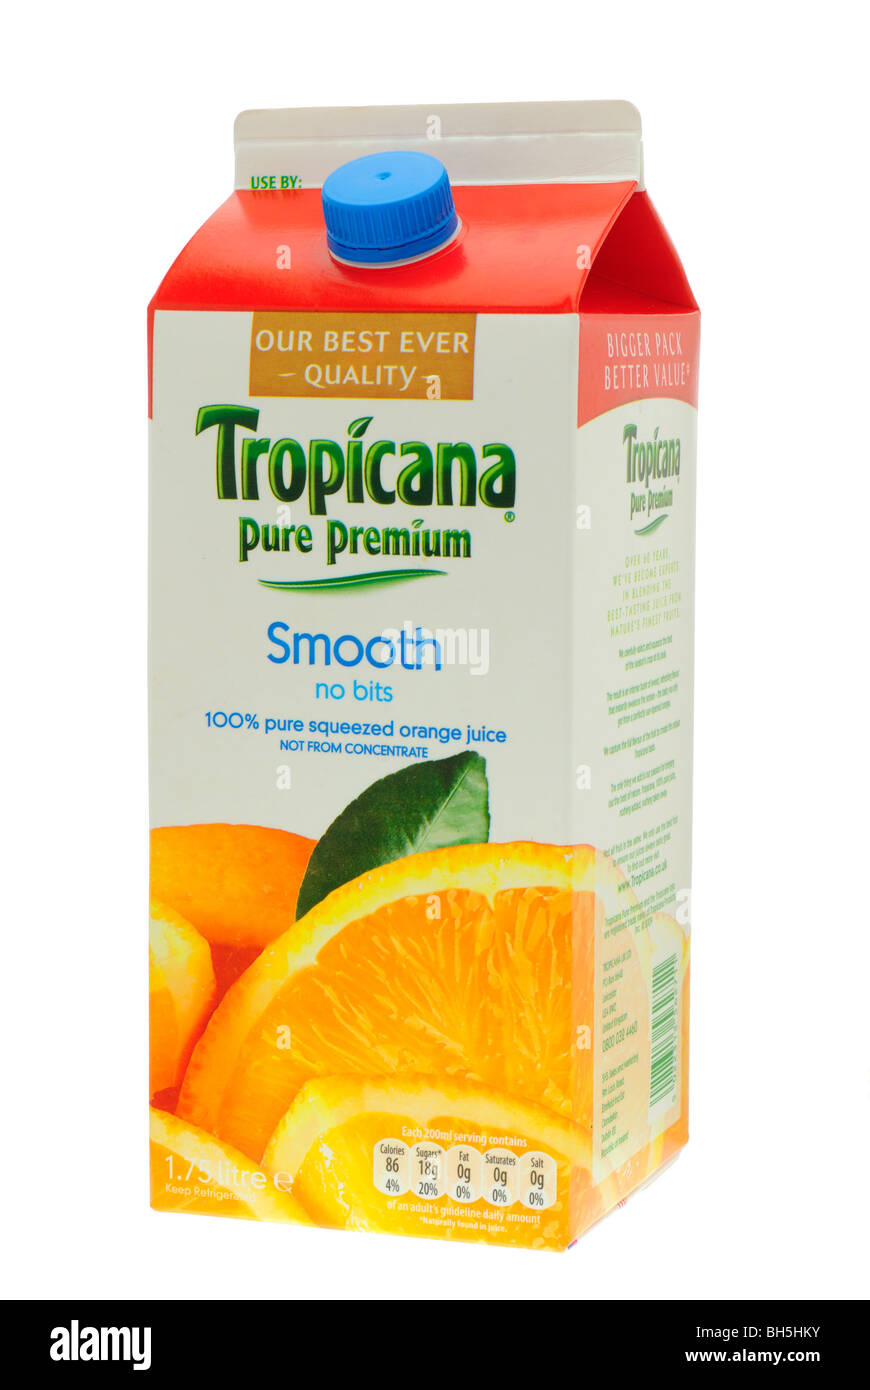 https://c8.alamy.com/comp/BH5HKY/carton-of-tropicana-pure-orange-juice-BH5HKY.jpg